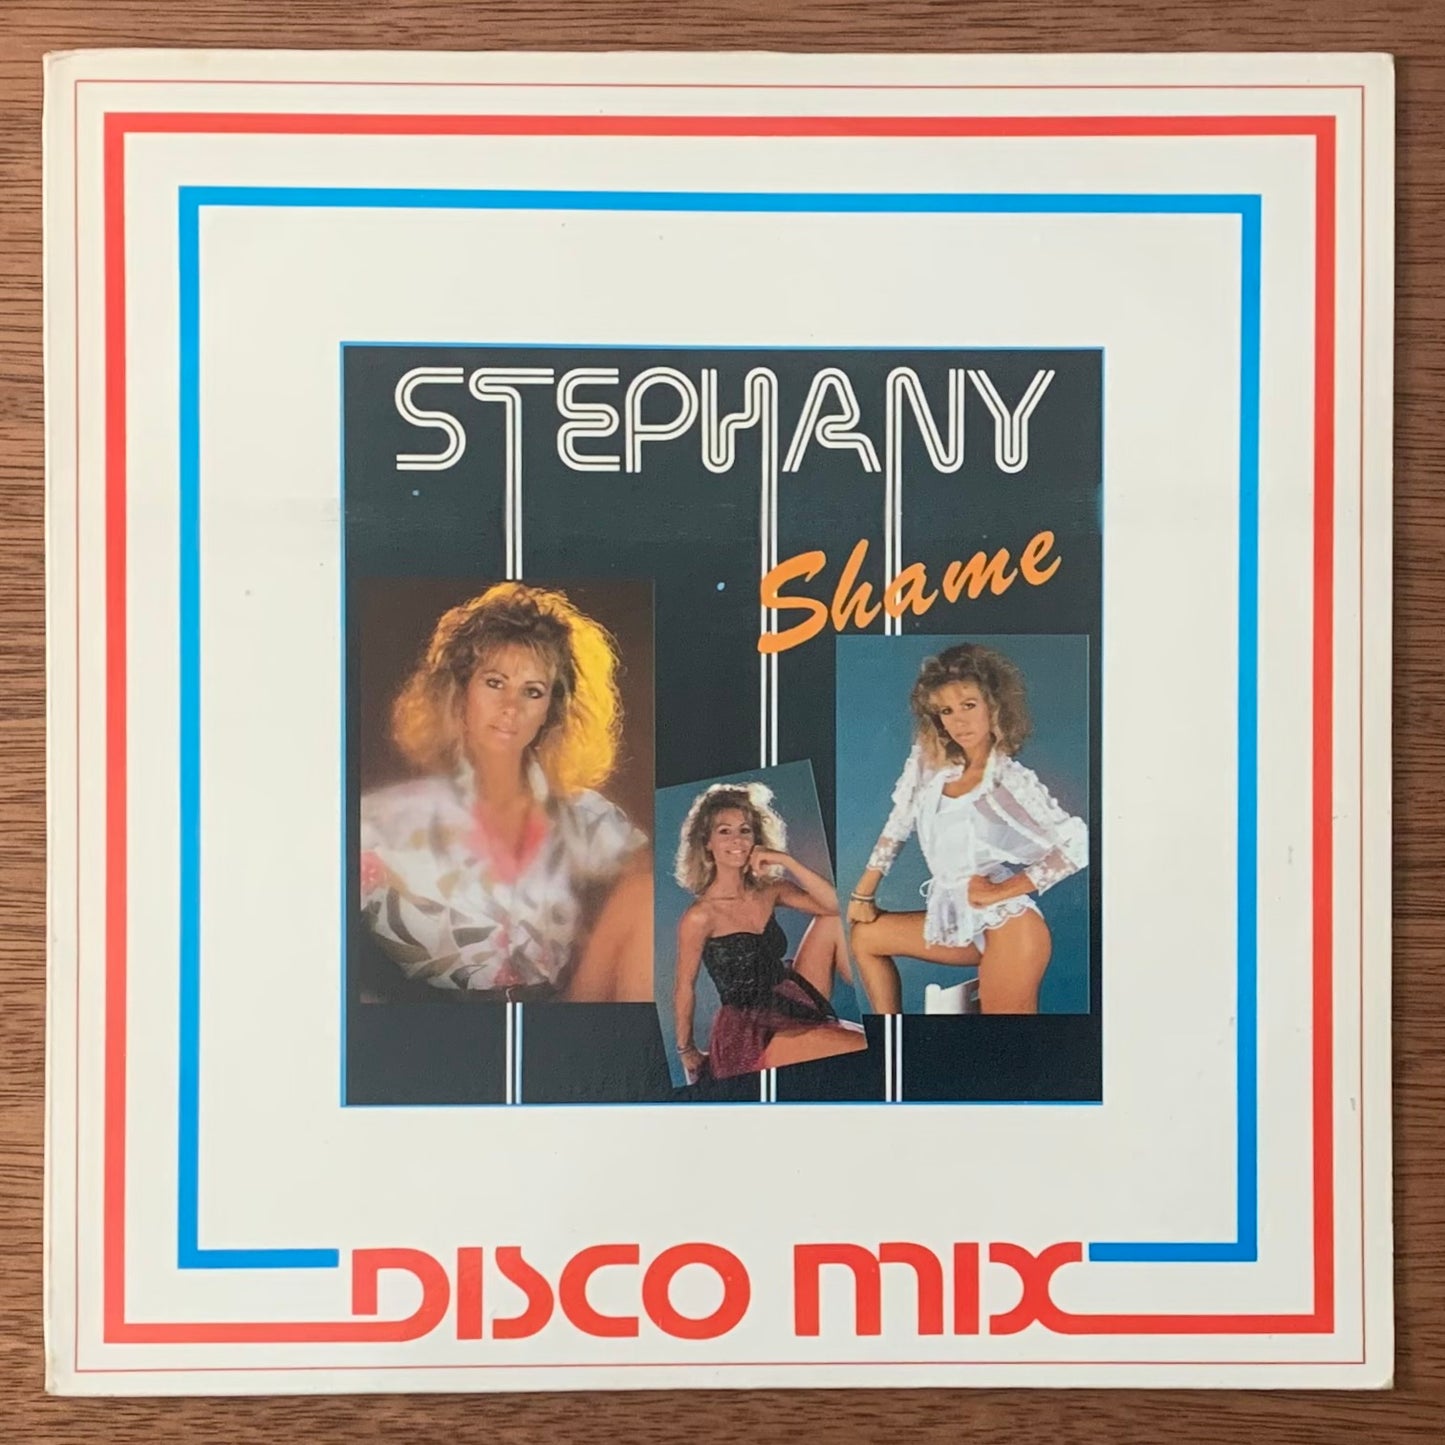 Stephany - Shame